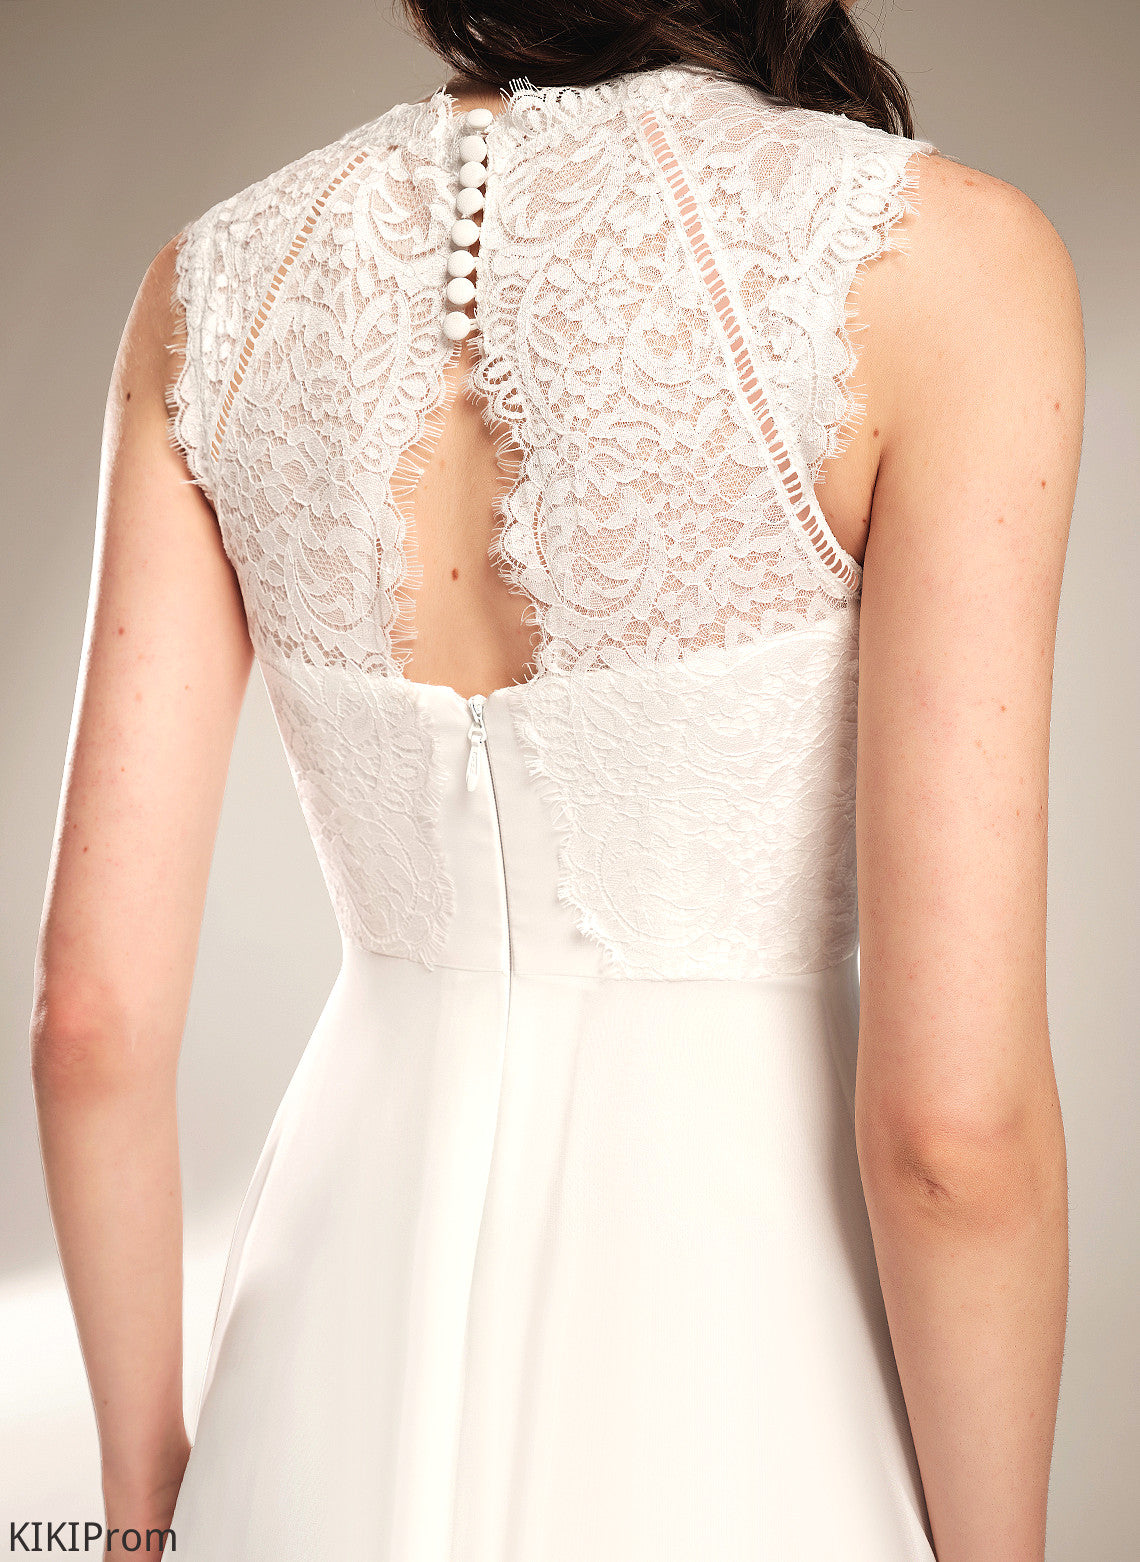 Scoop Floor-Length Jemima Lace Chiffon A-Line Wedding Dress Wedding Dresses